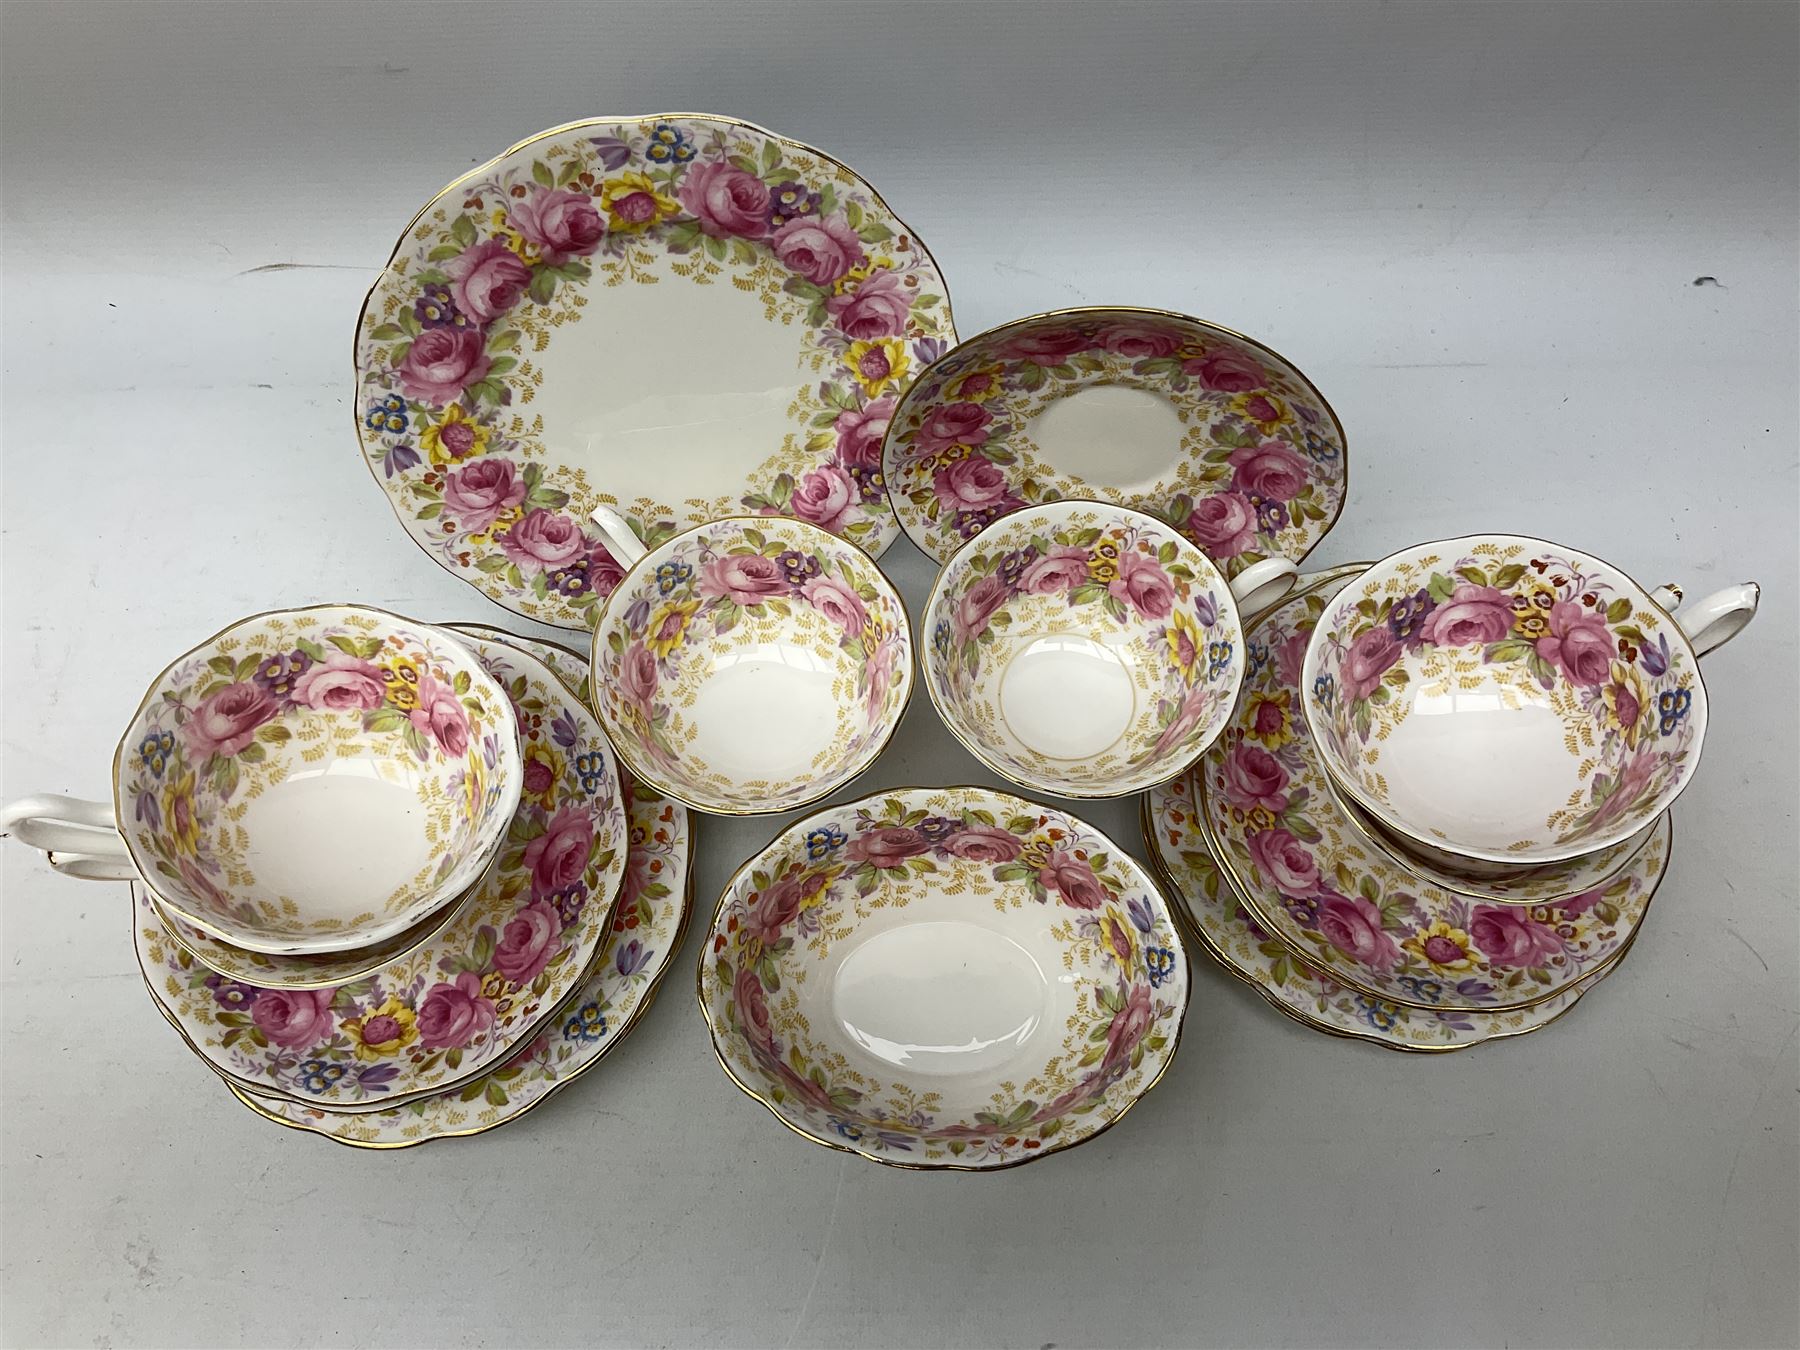 Royal Albert Serena pattern tea service - Image 2 of 4